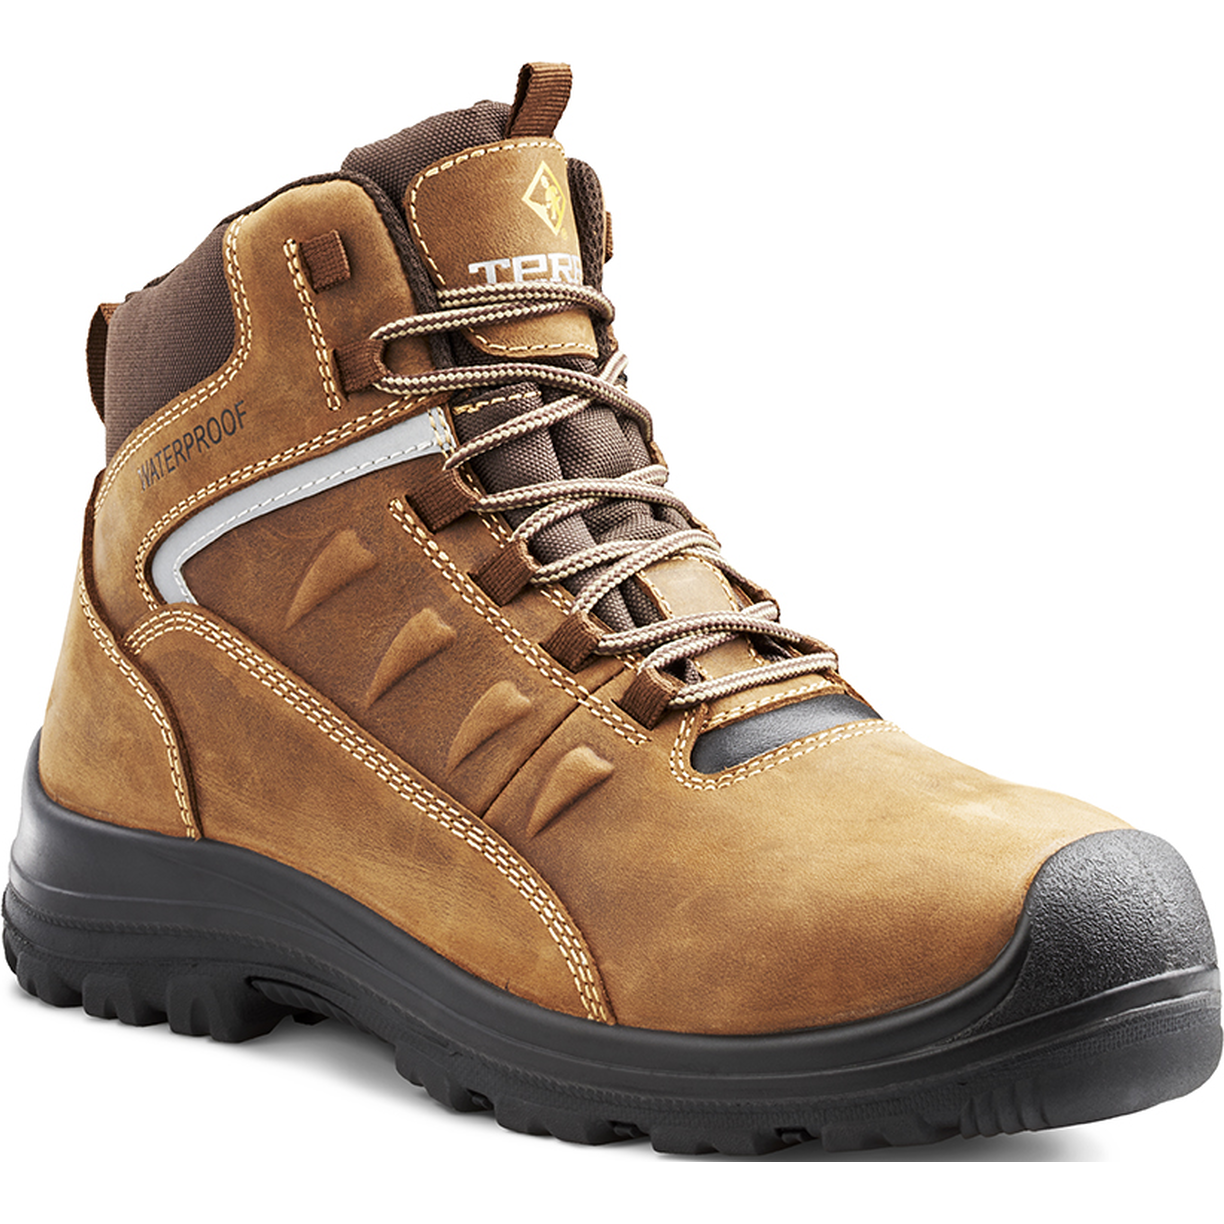 Terra Men's Findlay 6" Soft Toe WP Work Boot -Brown- 4NS7BN 7 / Medium / Brown - Overlook Boots